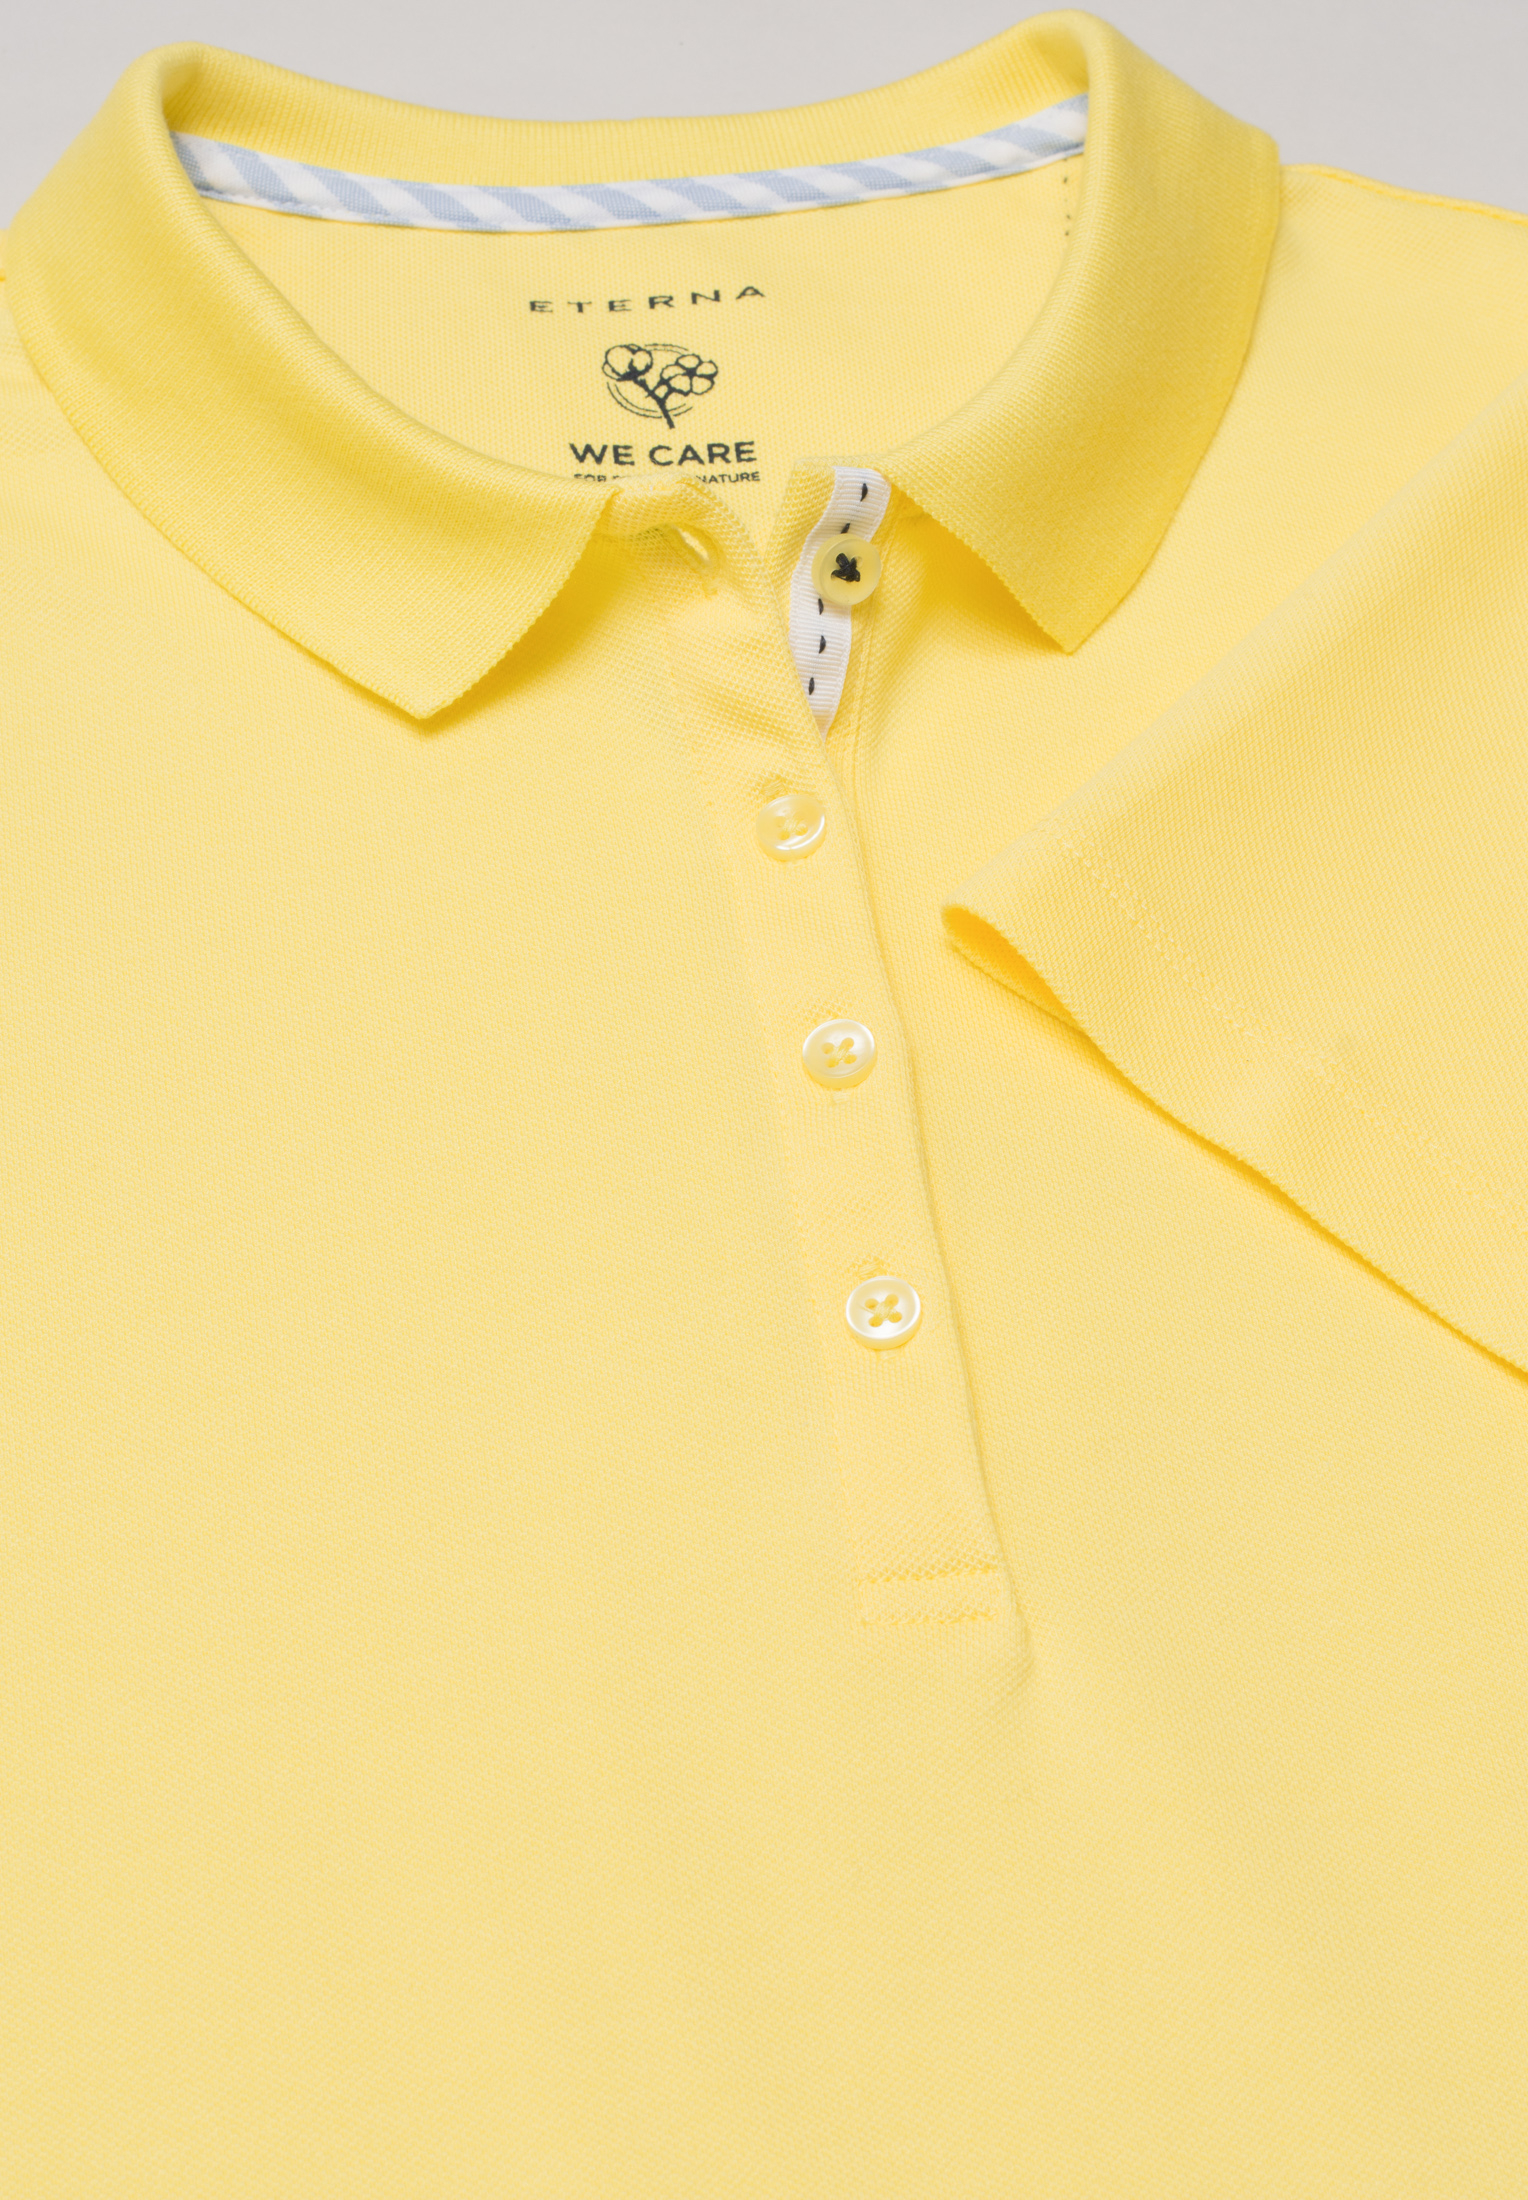 Polo shirt sleeve yellow plain yellow | in 3XL | | 2SP00006-07-01-3XL-1/2 | short